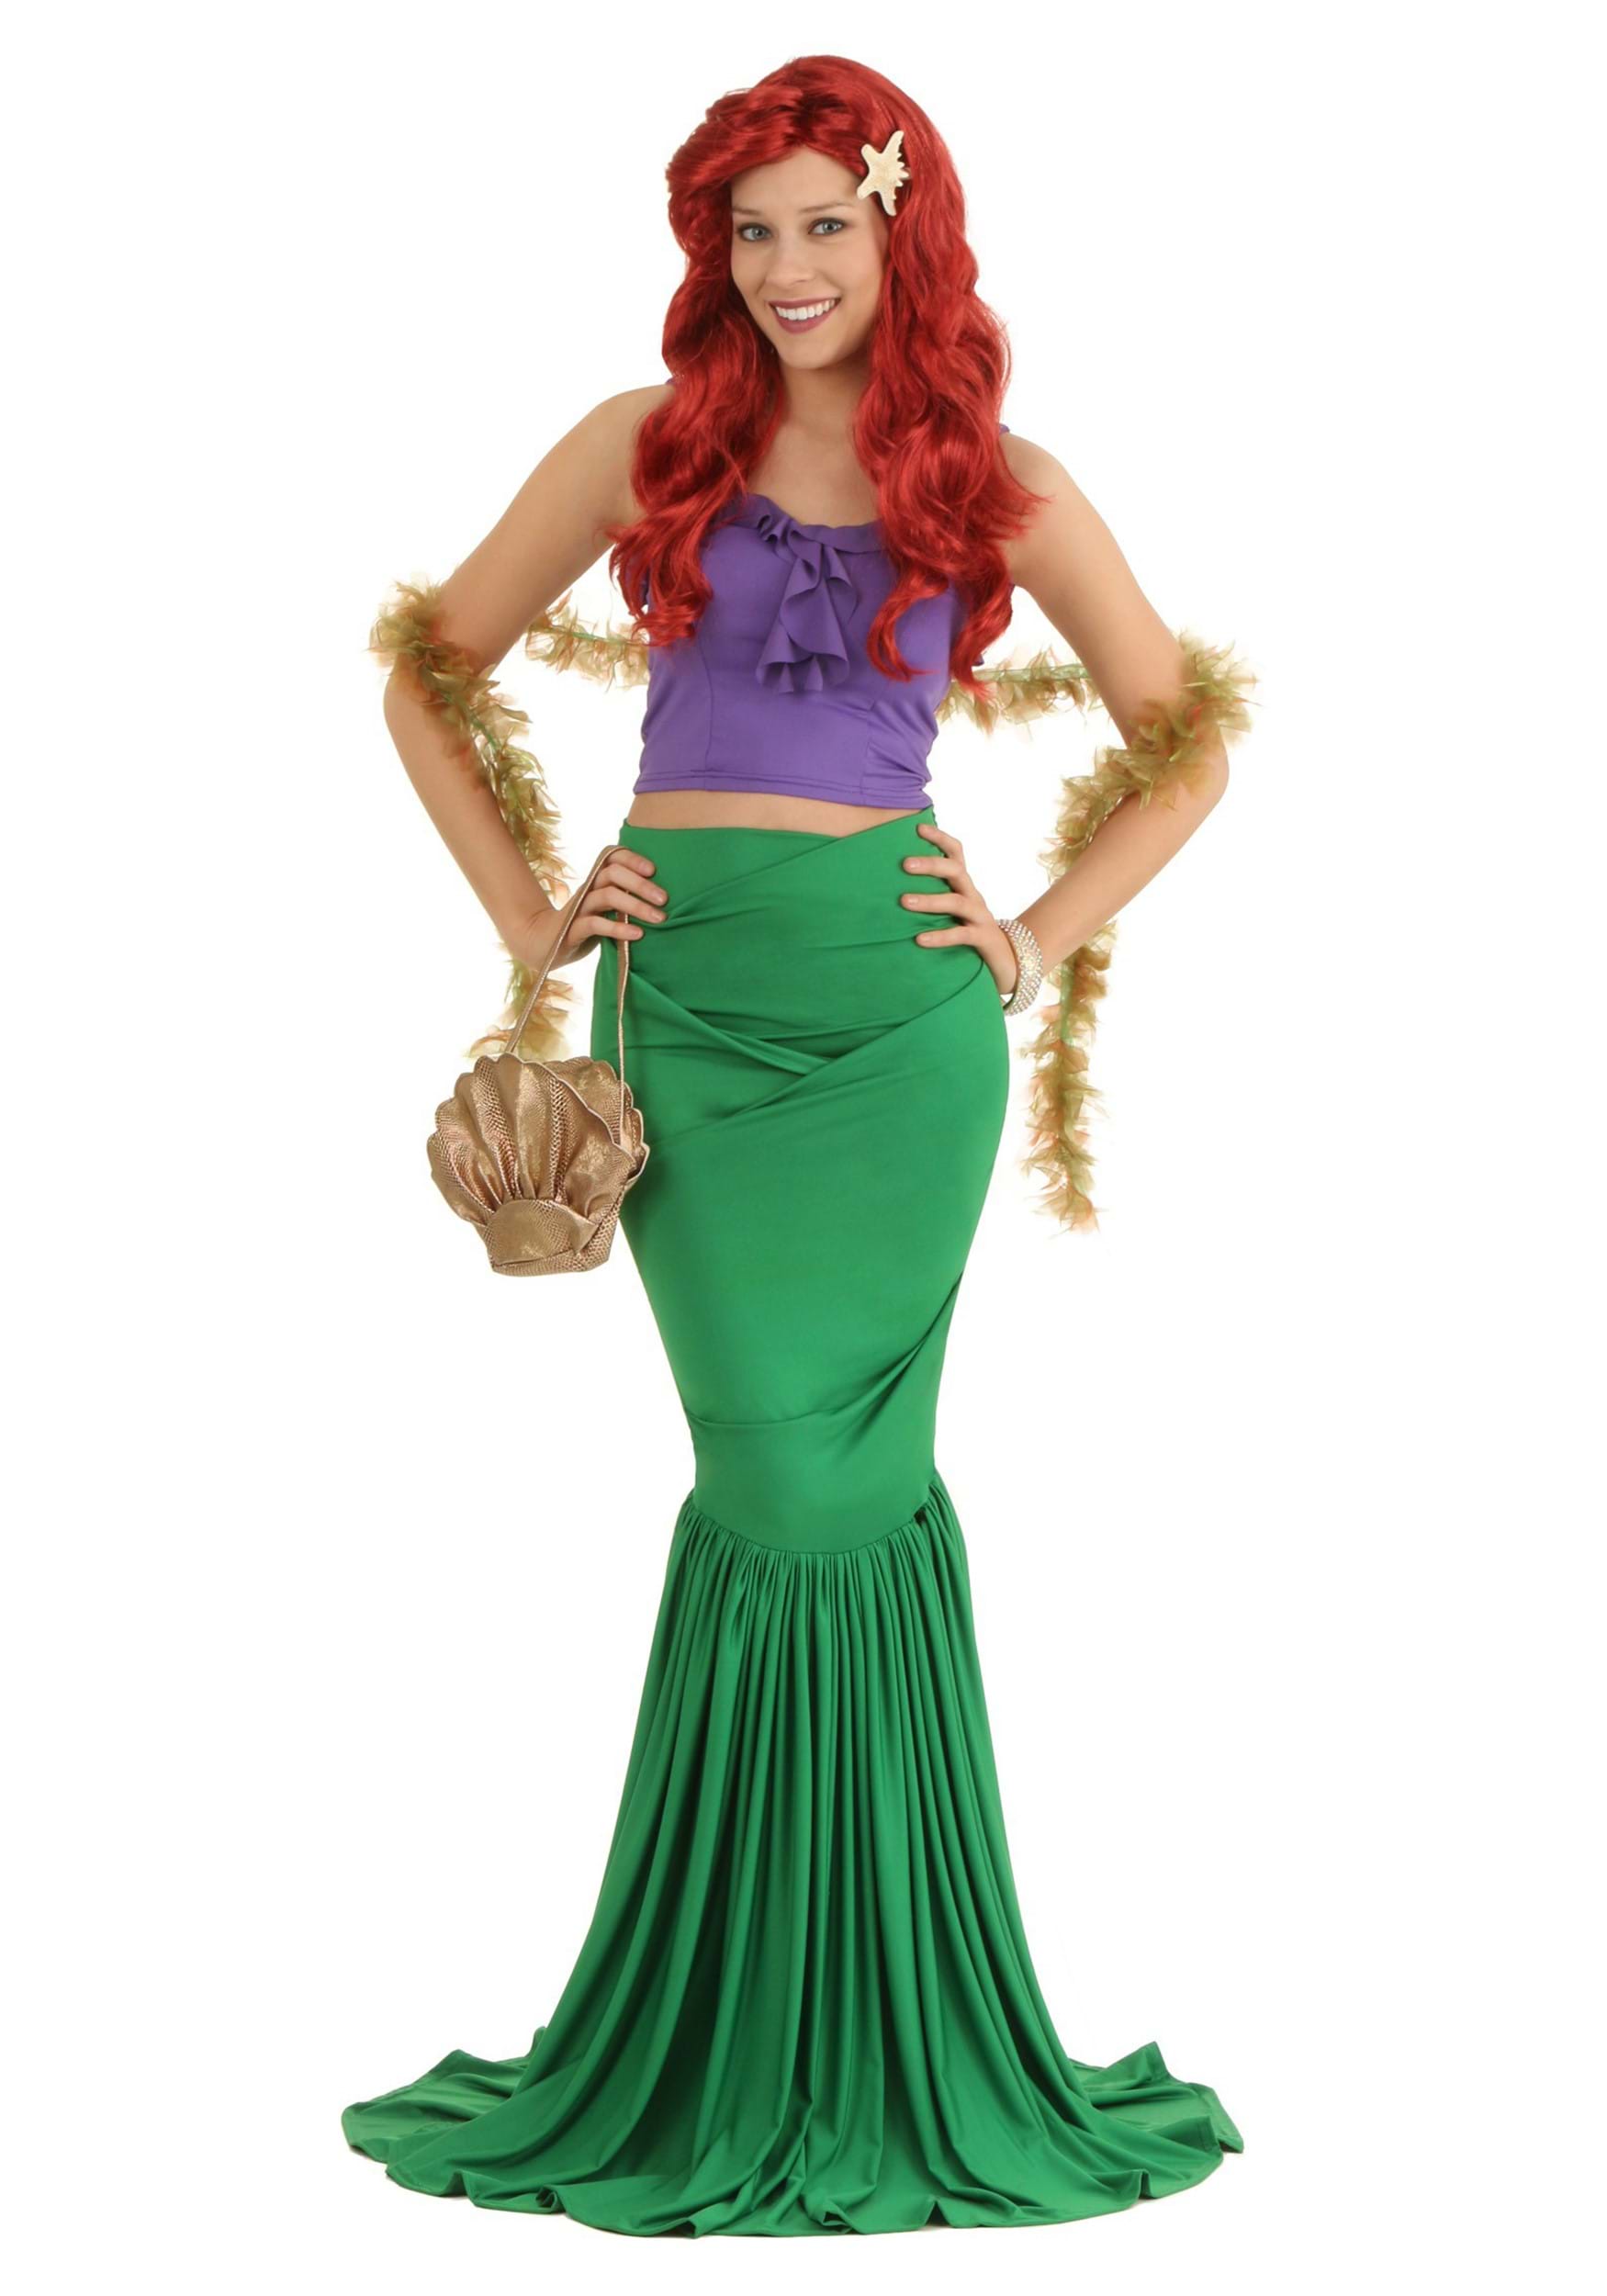 Photos - Fancy Dress FUN Costumes Adult Mermaid Costume | Women's Costumes Green/Purple FUN